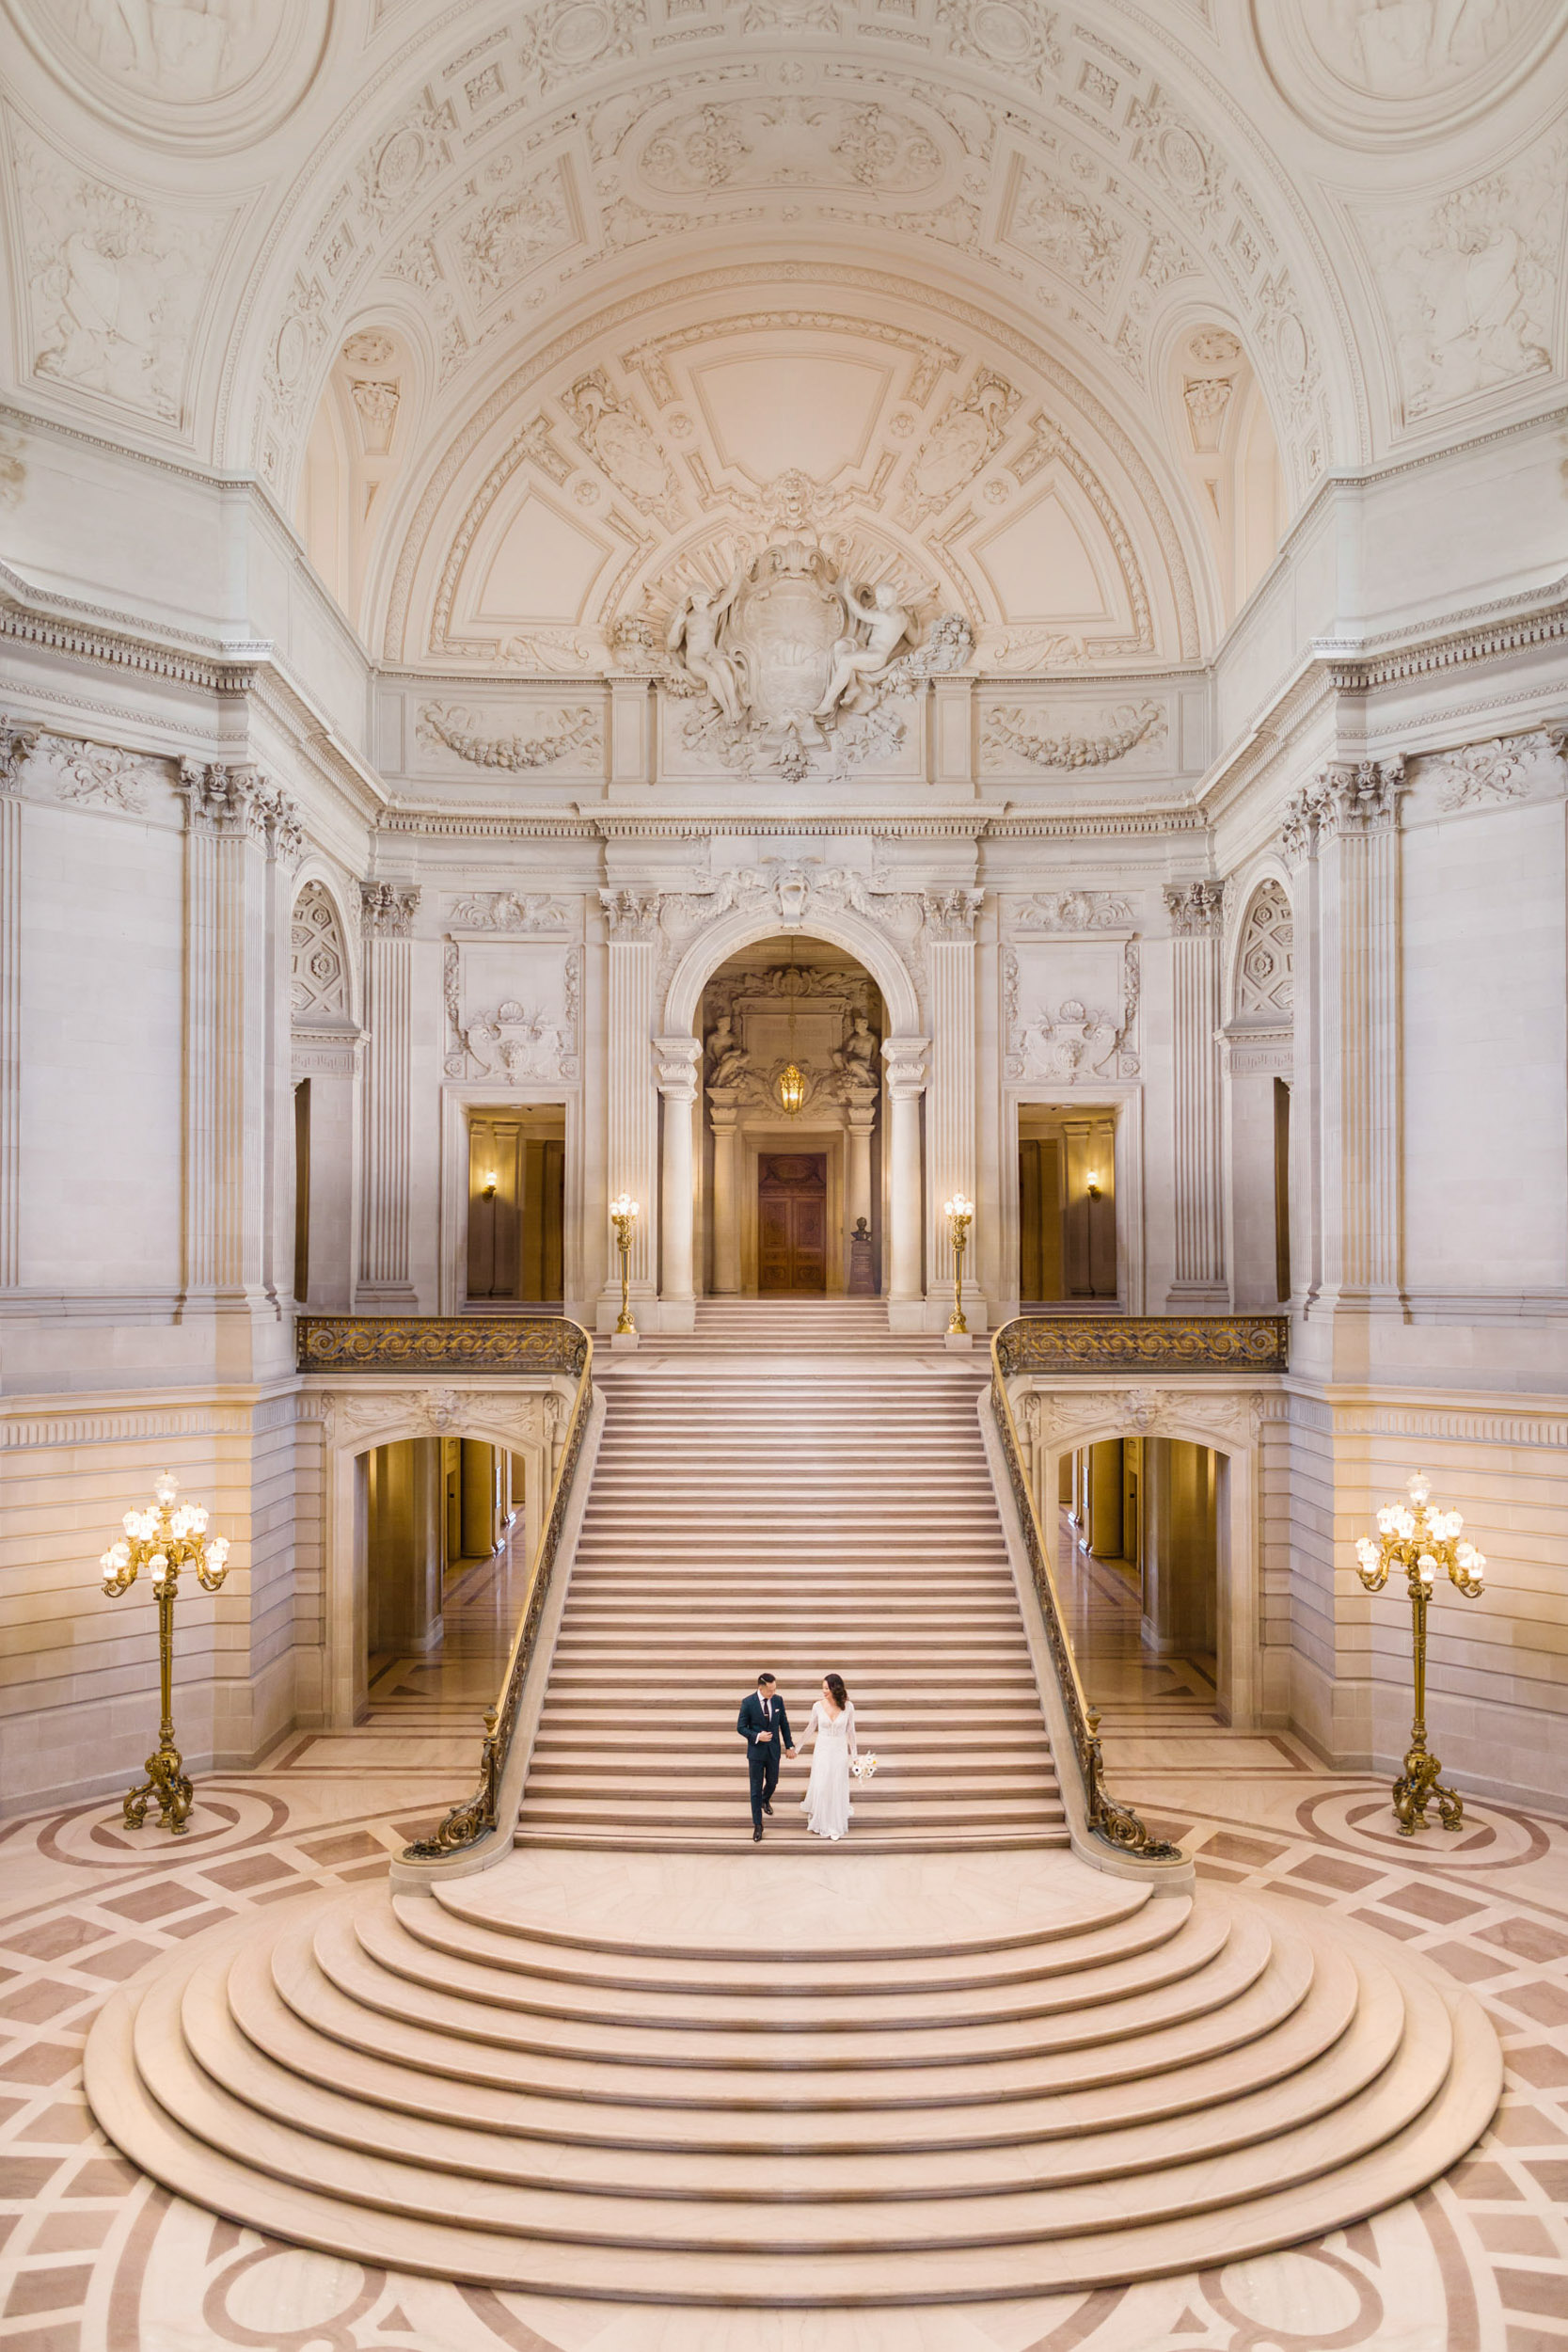 Intimate San Francisco City Hall Wedding